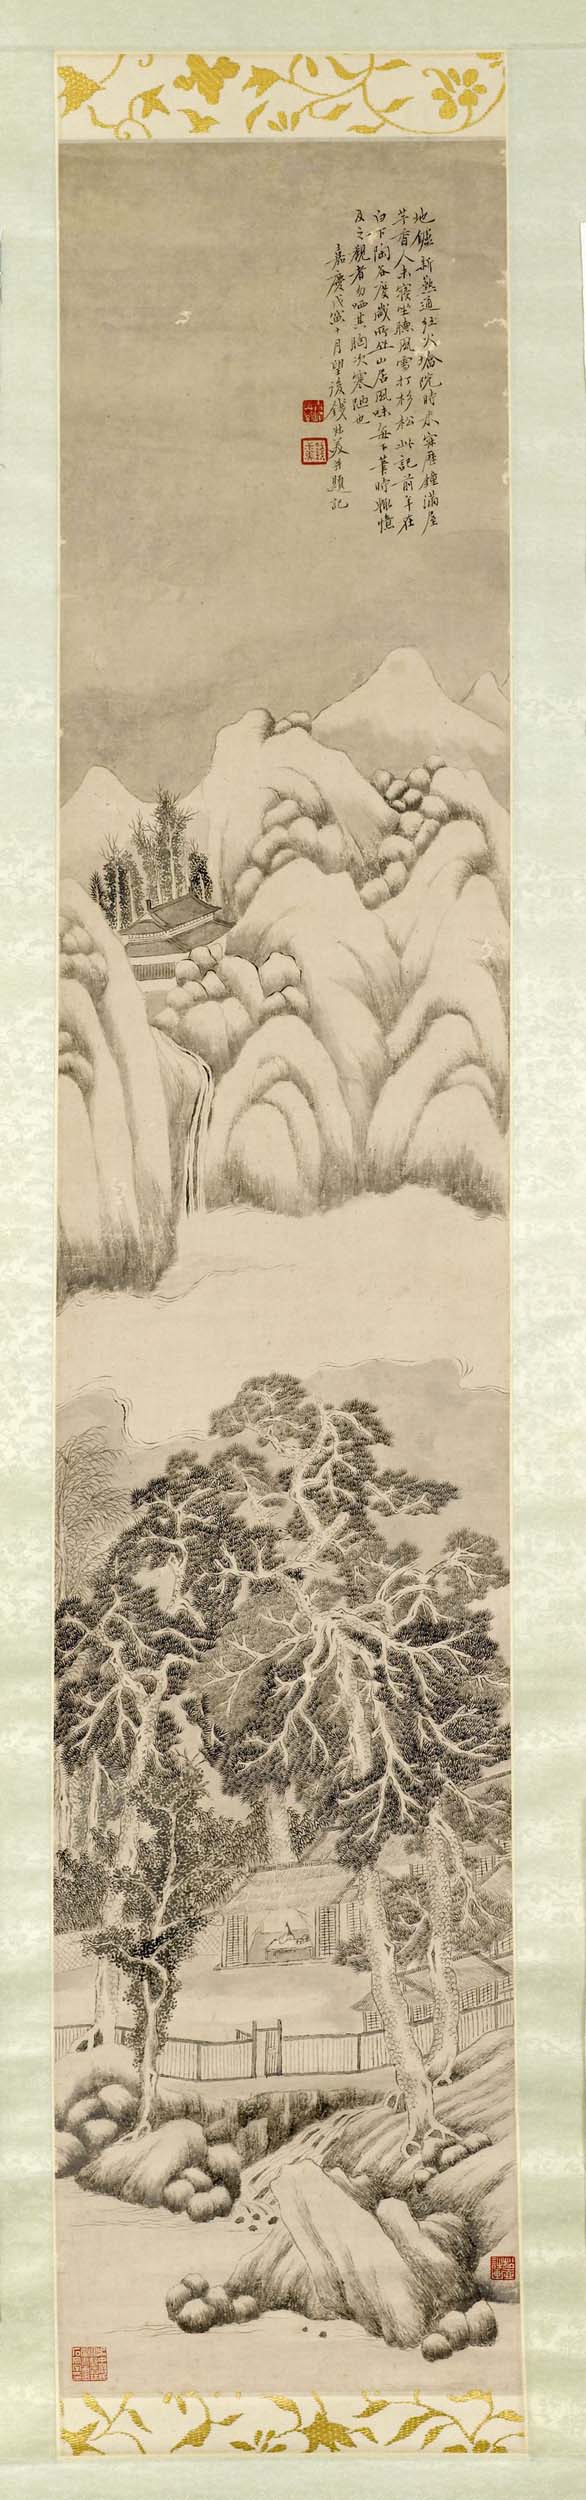 du-qian-du-qian-1818-snowy-landscape-art-print-fine-art-reproduction-wall-art